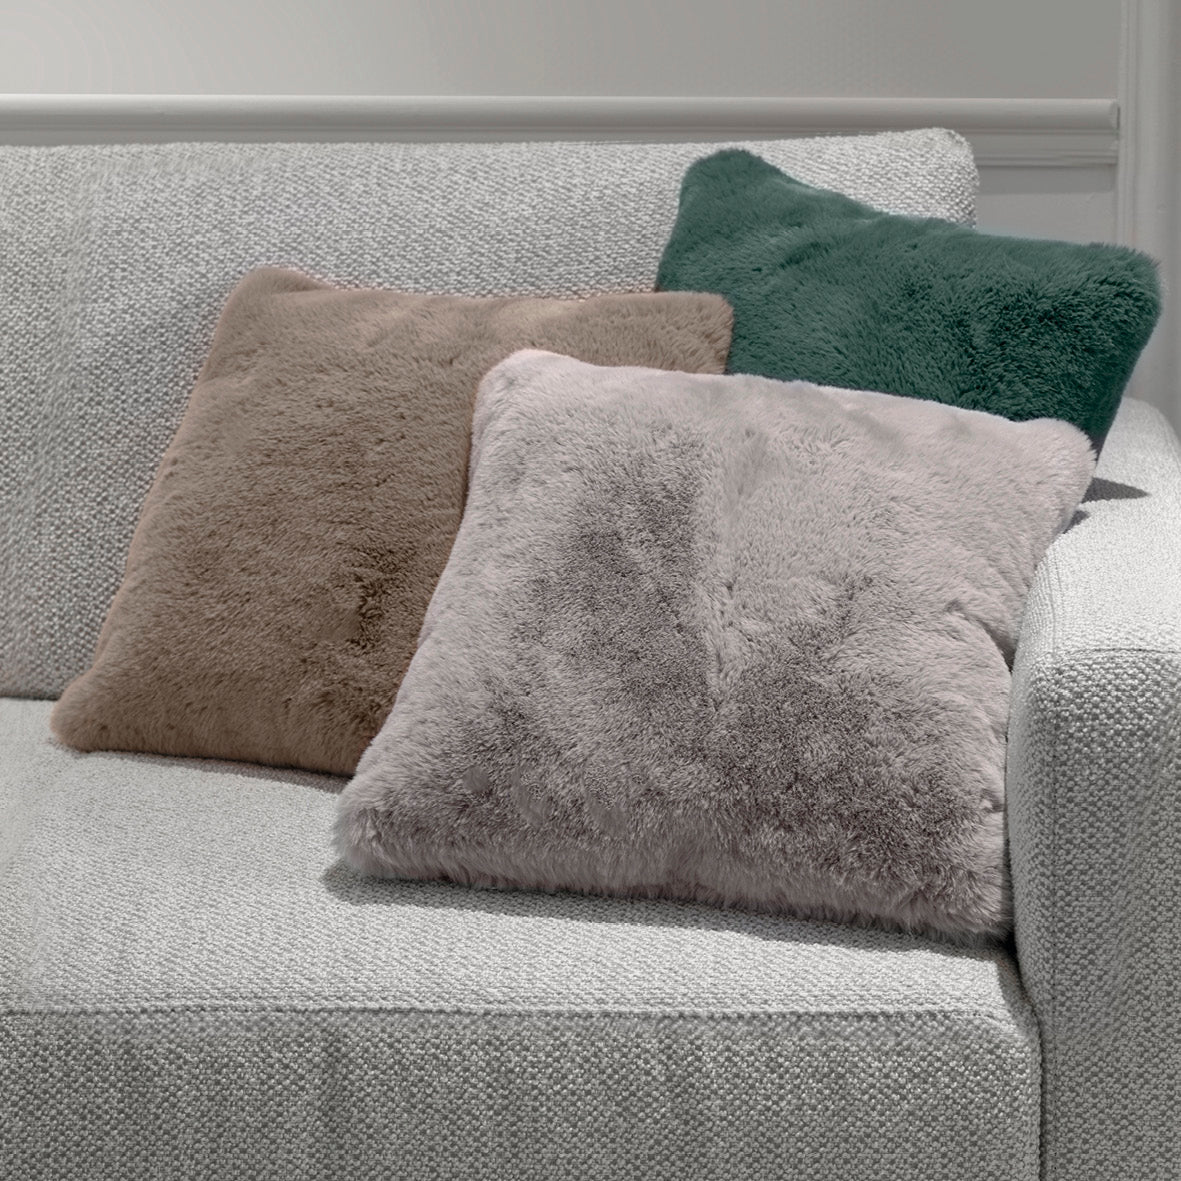 Cushion cover fake fur Grey - 40 x 40 cm